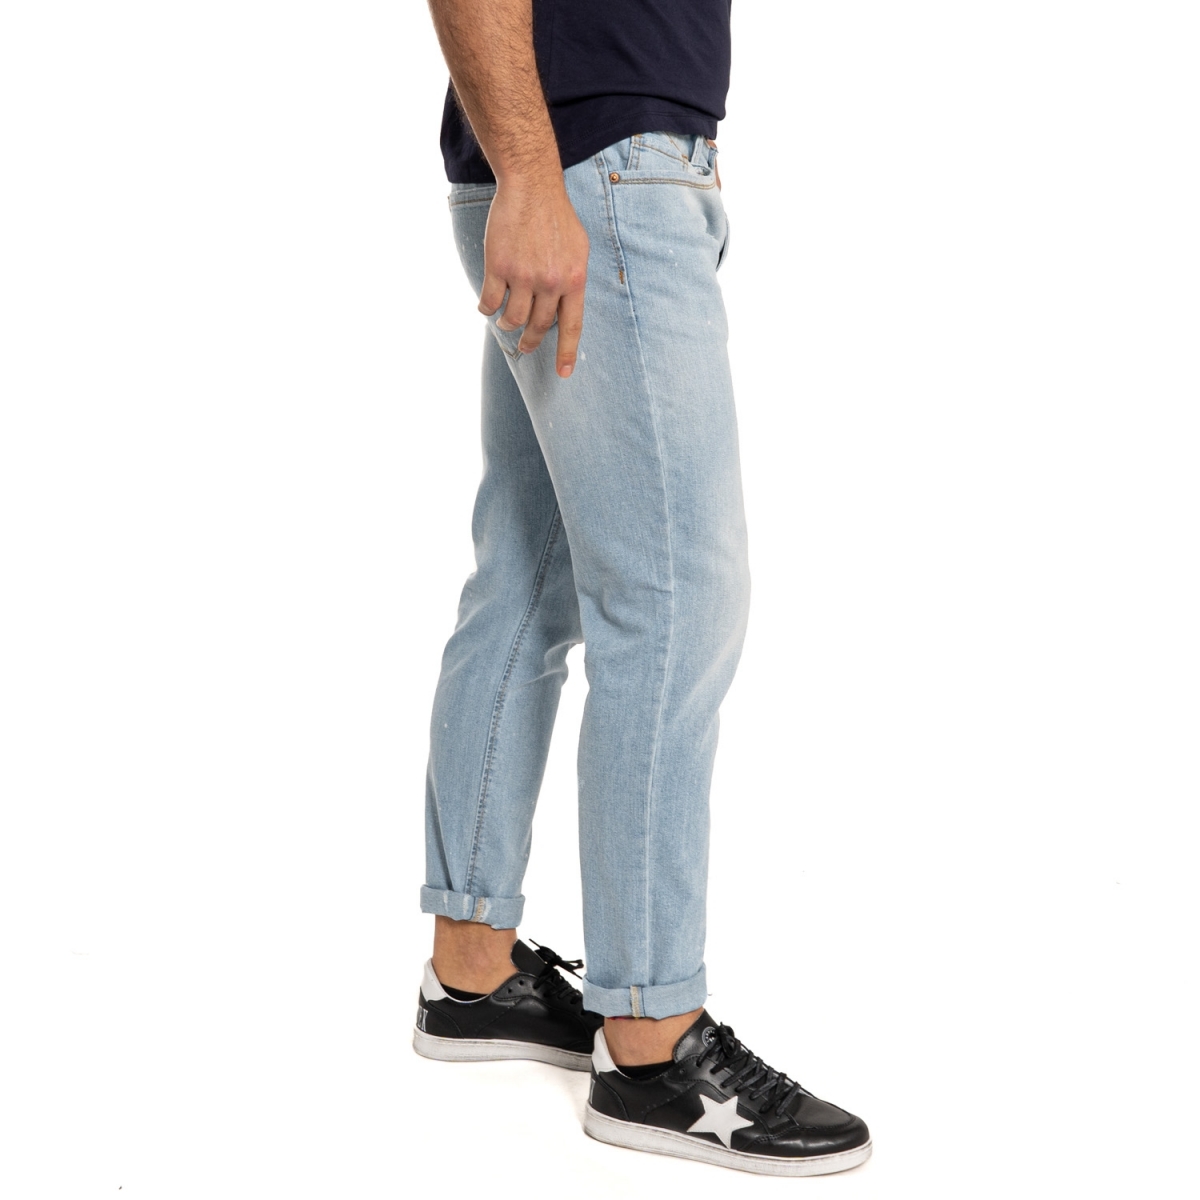 clothing Denim men Jeans Slim fit LPHM1090-3 LANDEK PARK Cafedelmar Shop